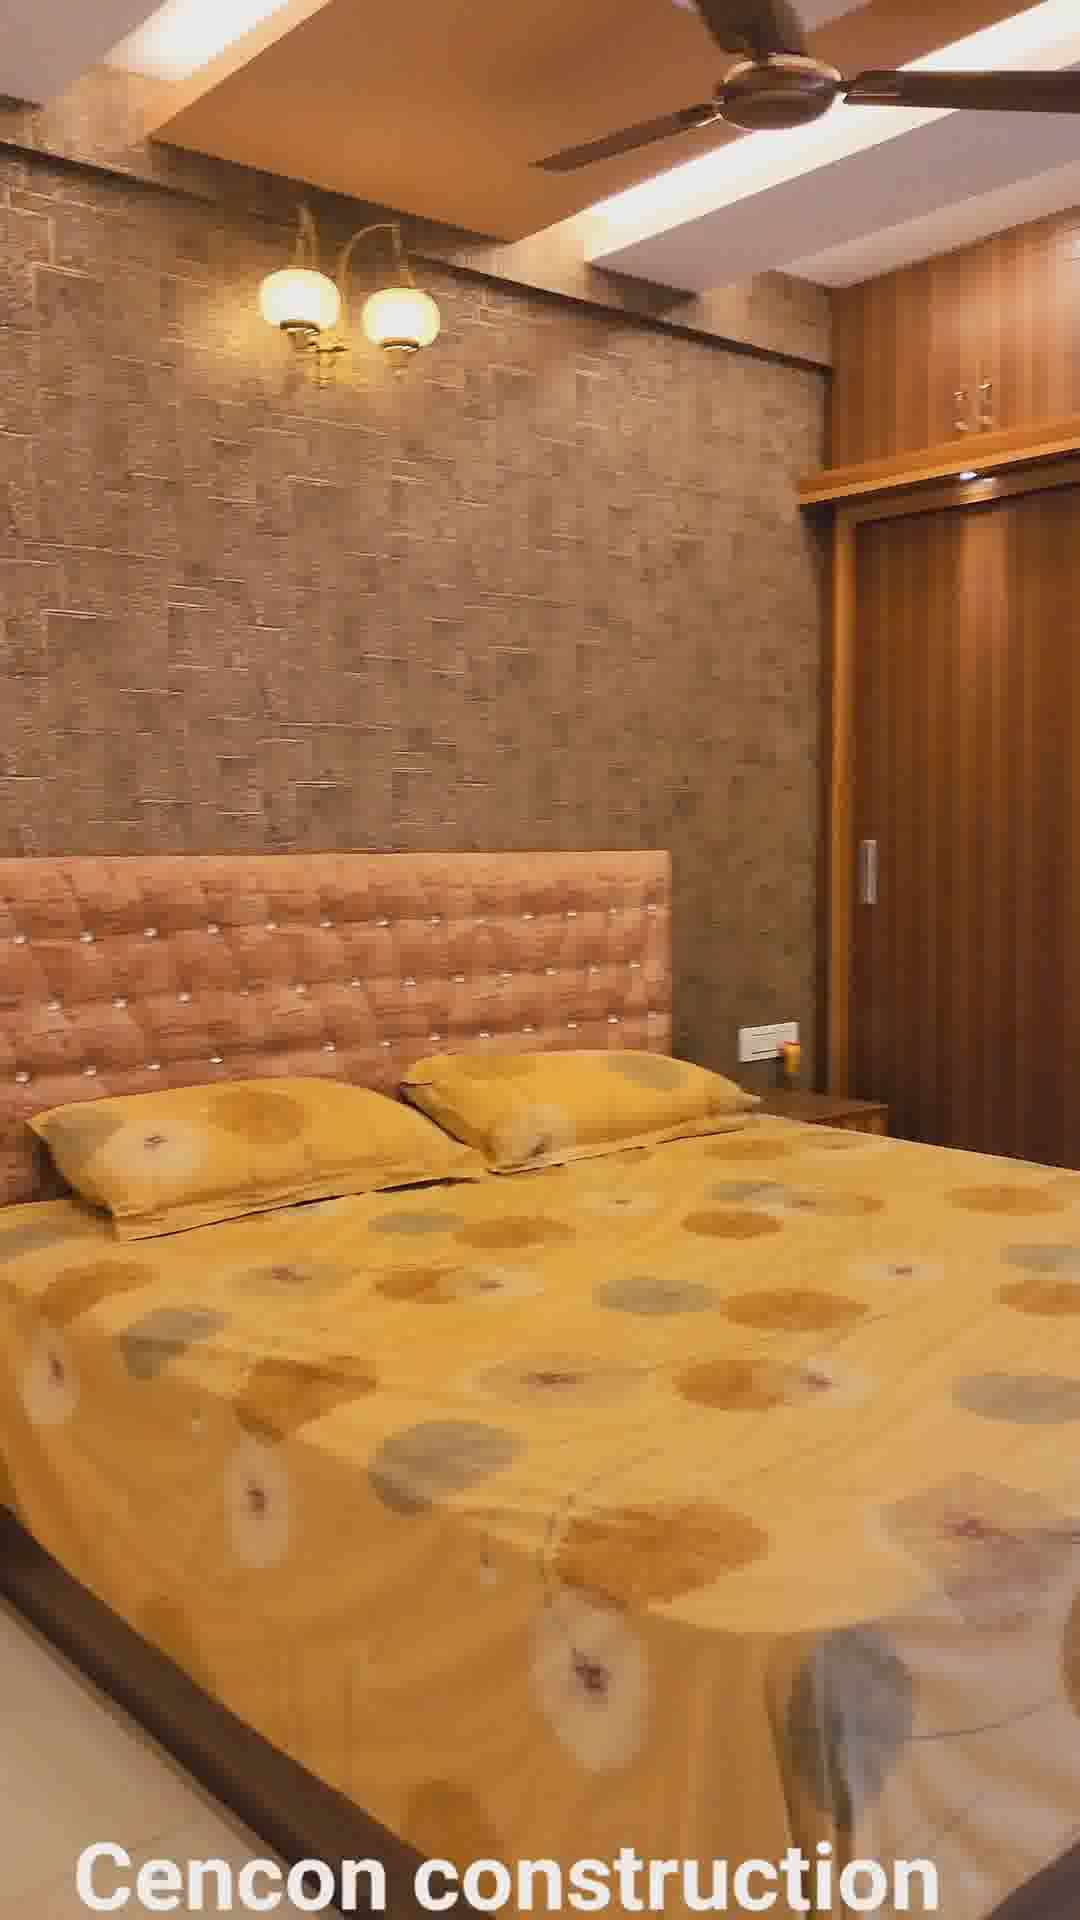 #cencon_construction  #8880009001  #www.cenconconstruction.com #koloapp  #Architect  #BedroomDecor  #MasterBedroom